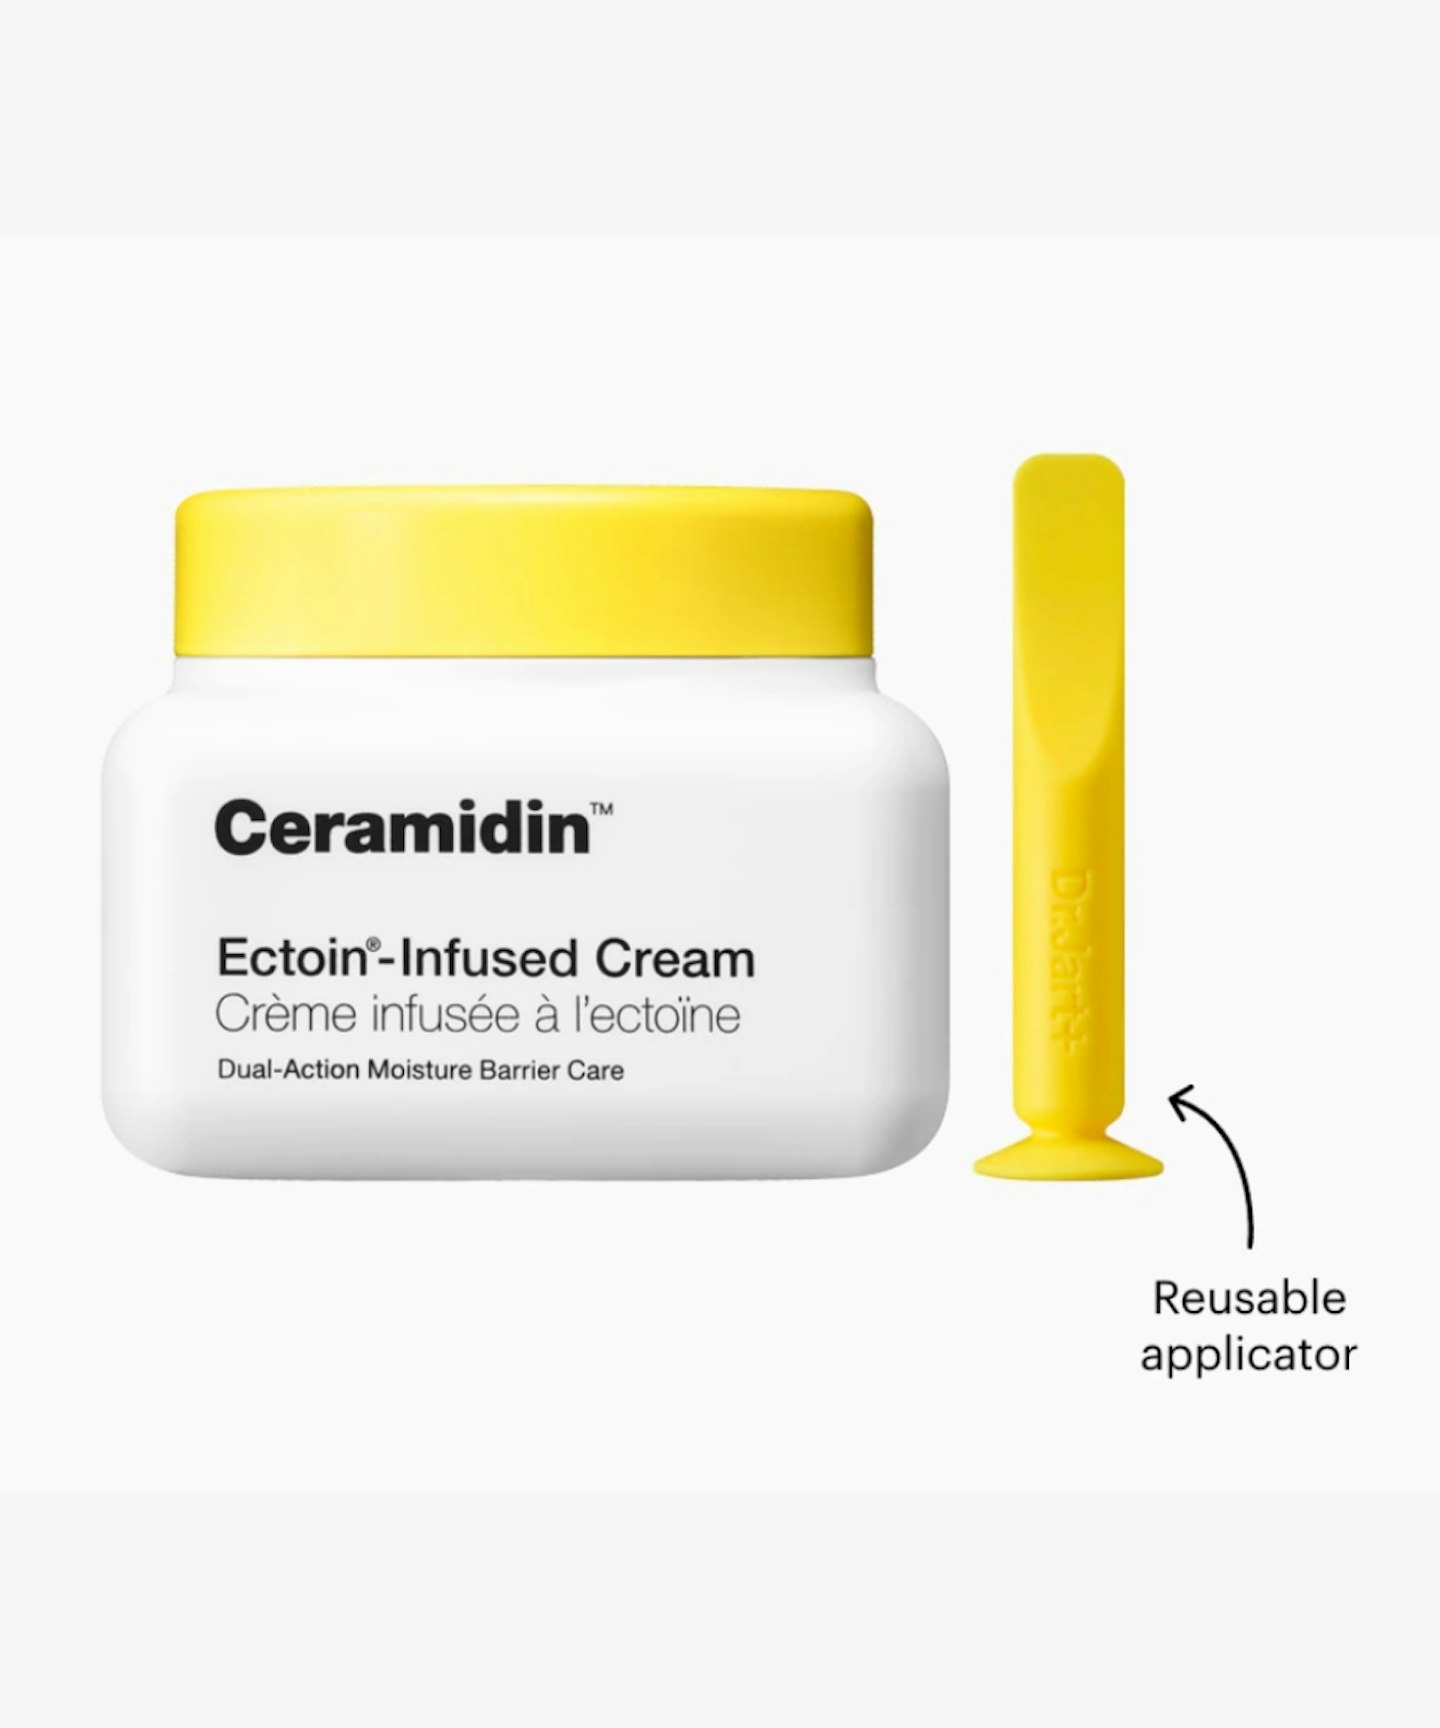 DrJart Ceramidin Ectoin-Infused Cream